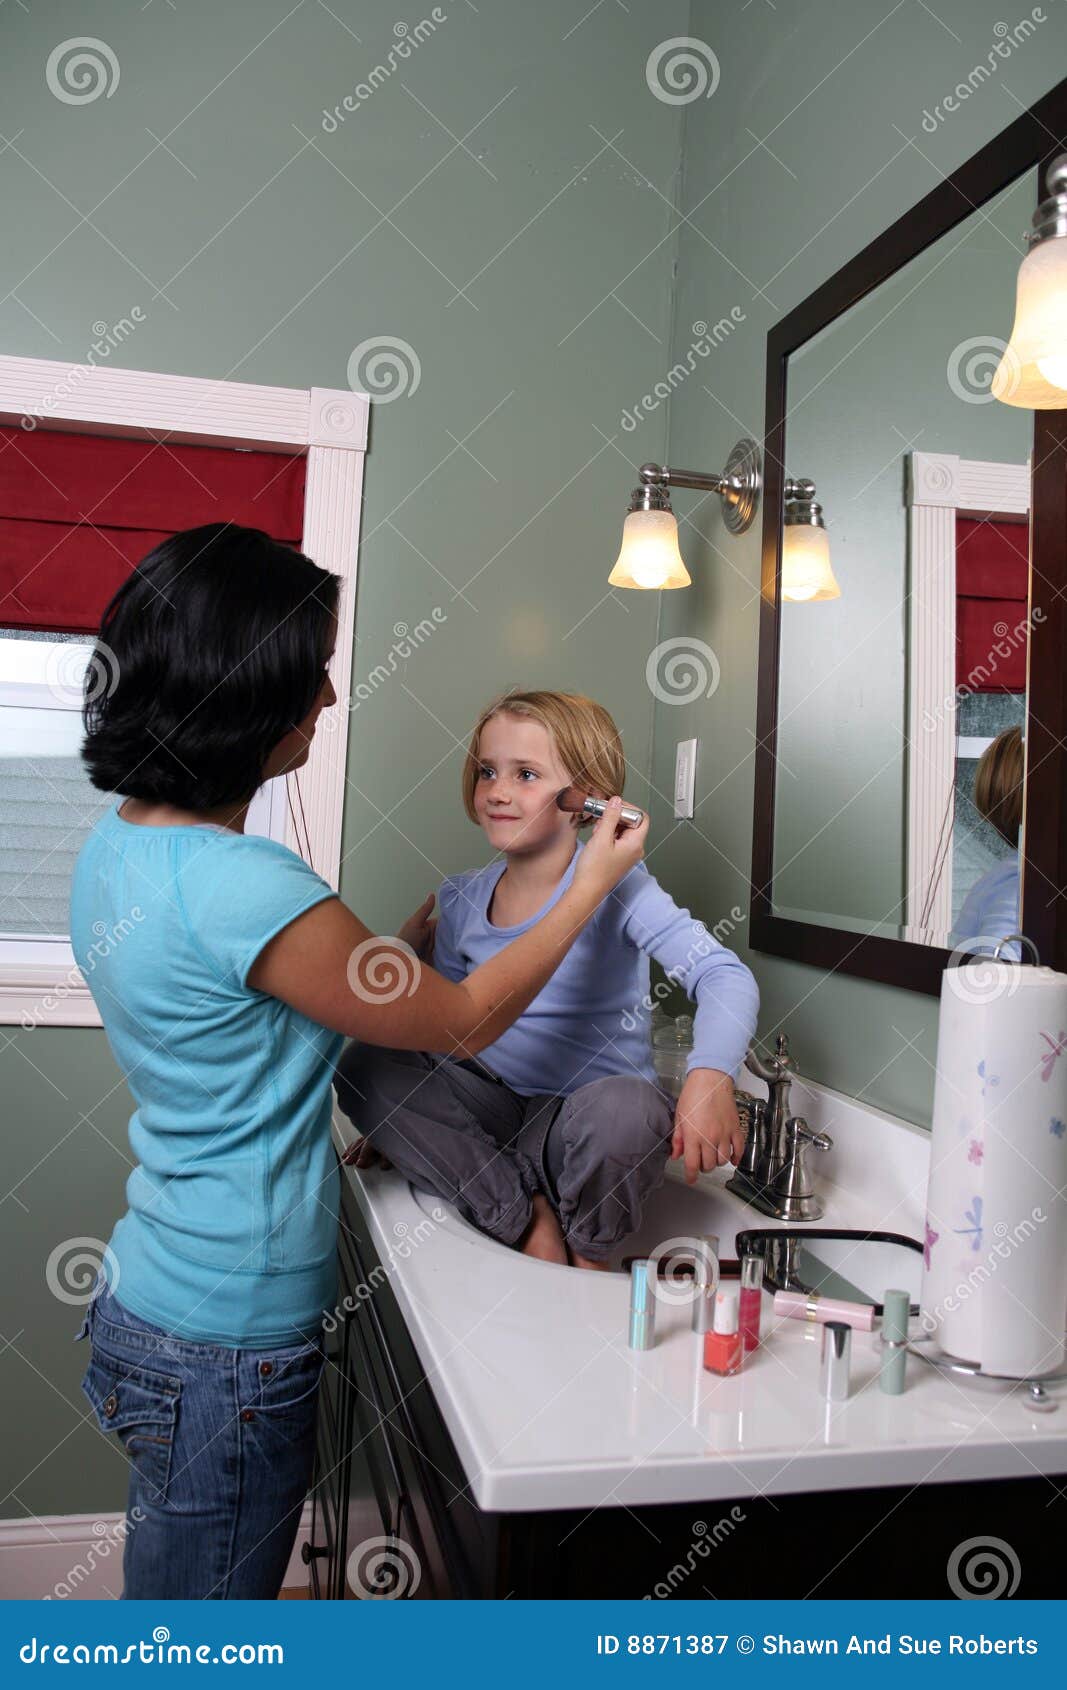 Teen girl sitting on sink